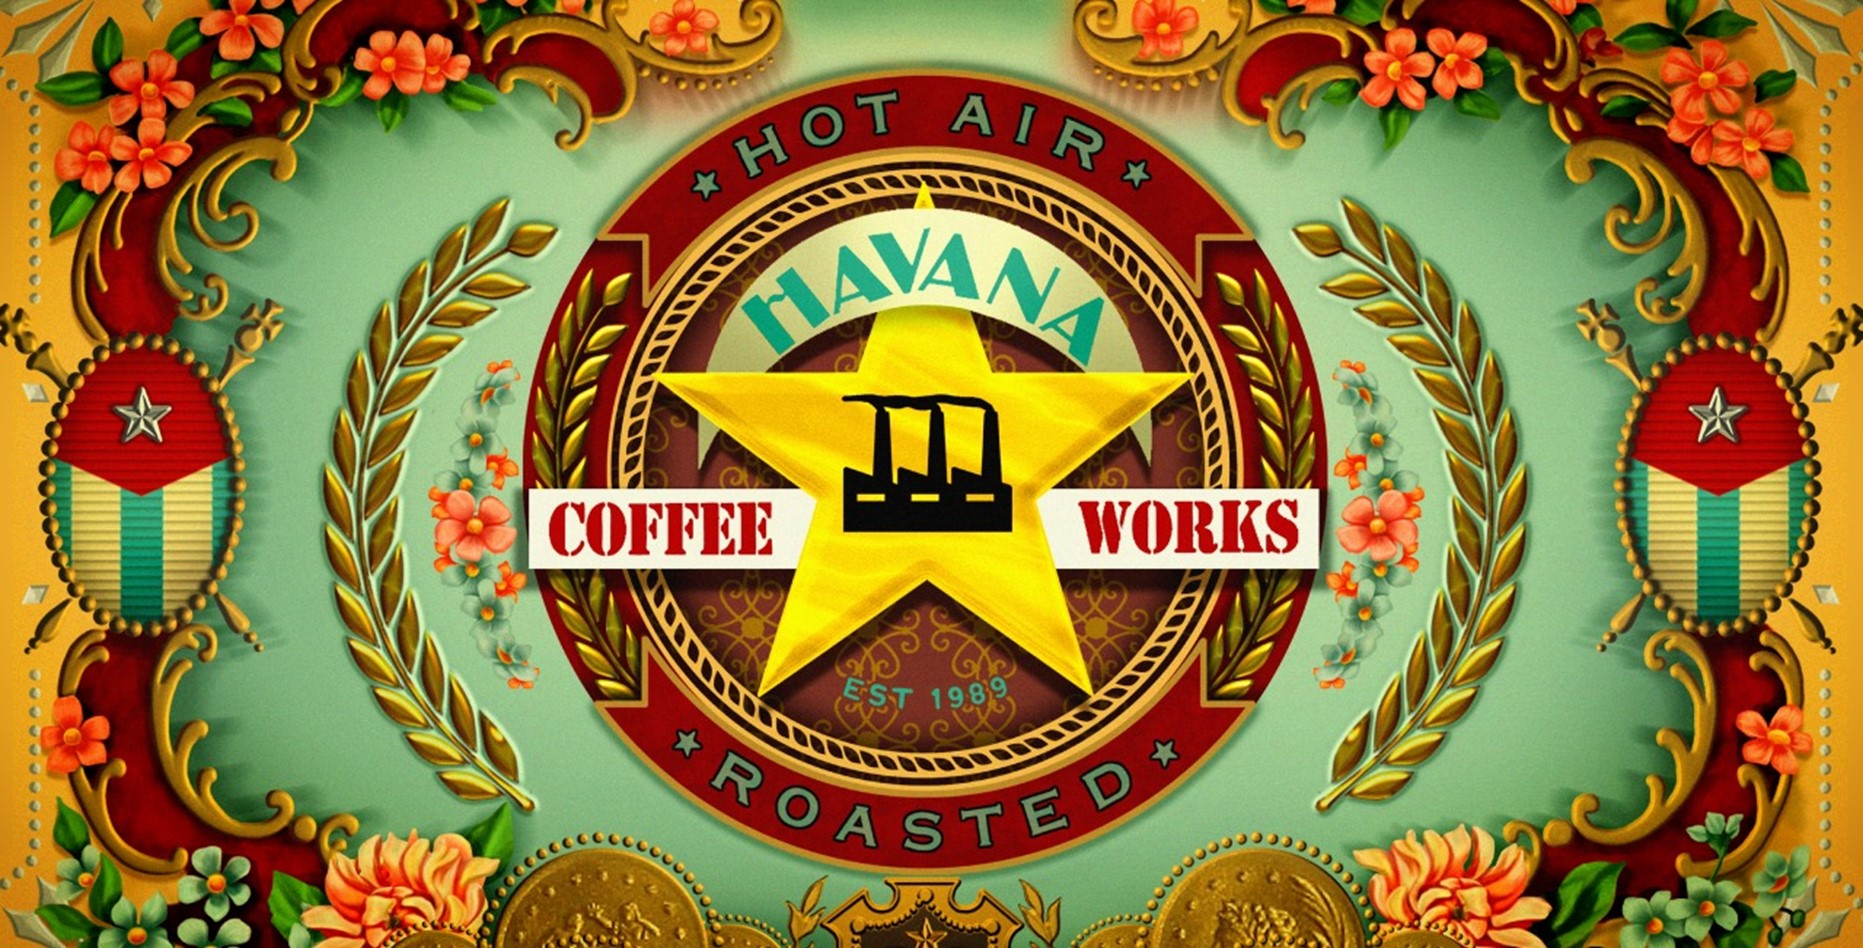 havana logo